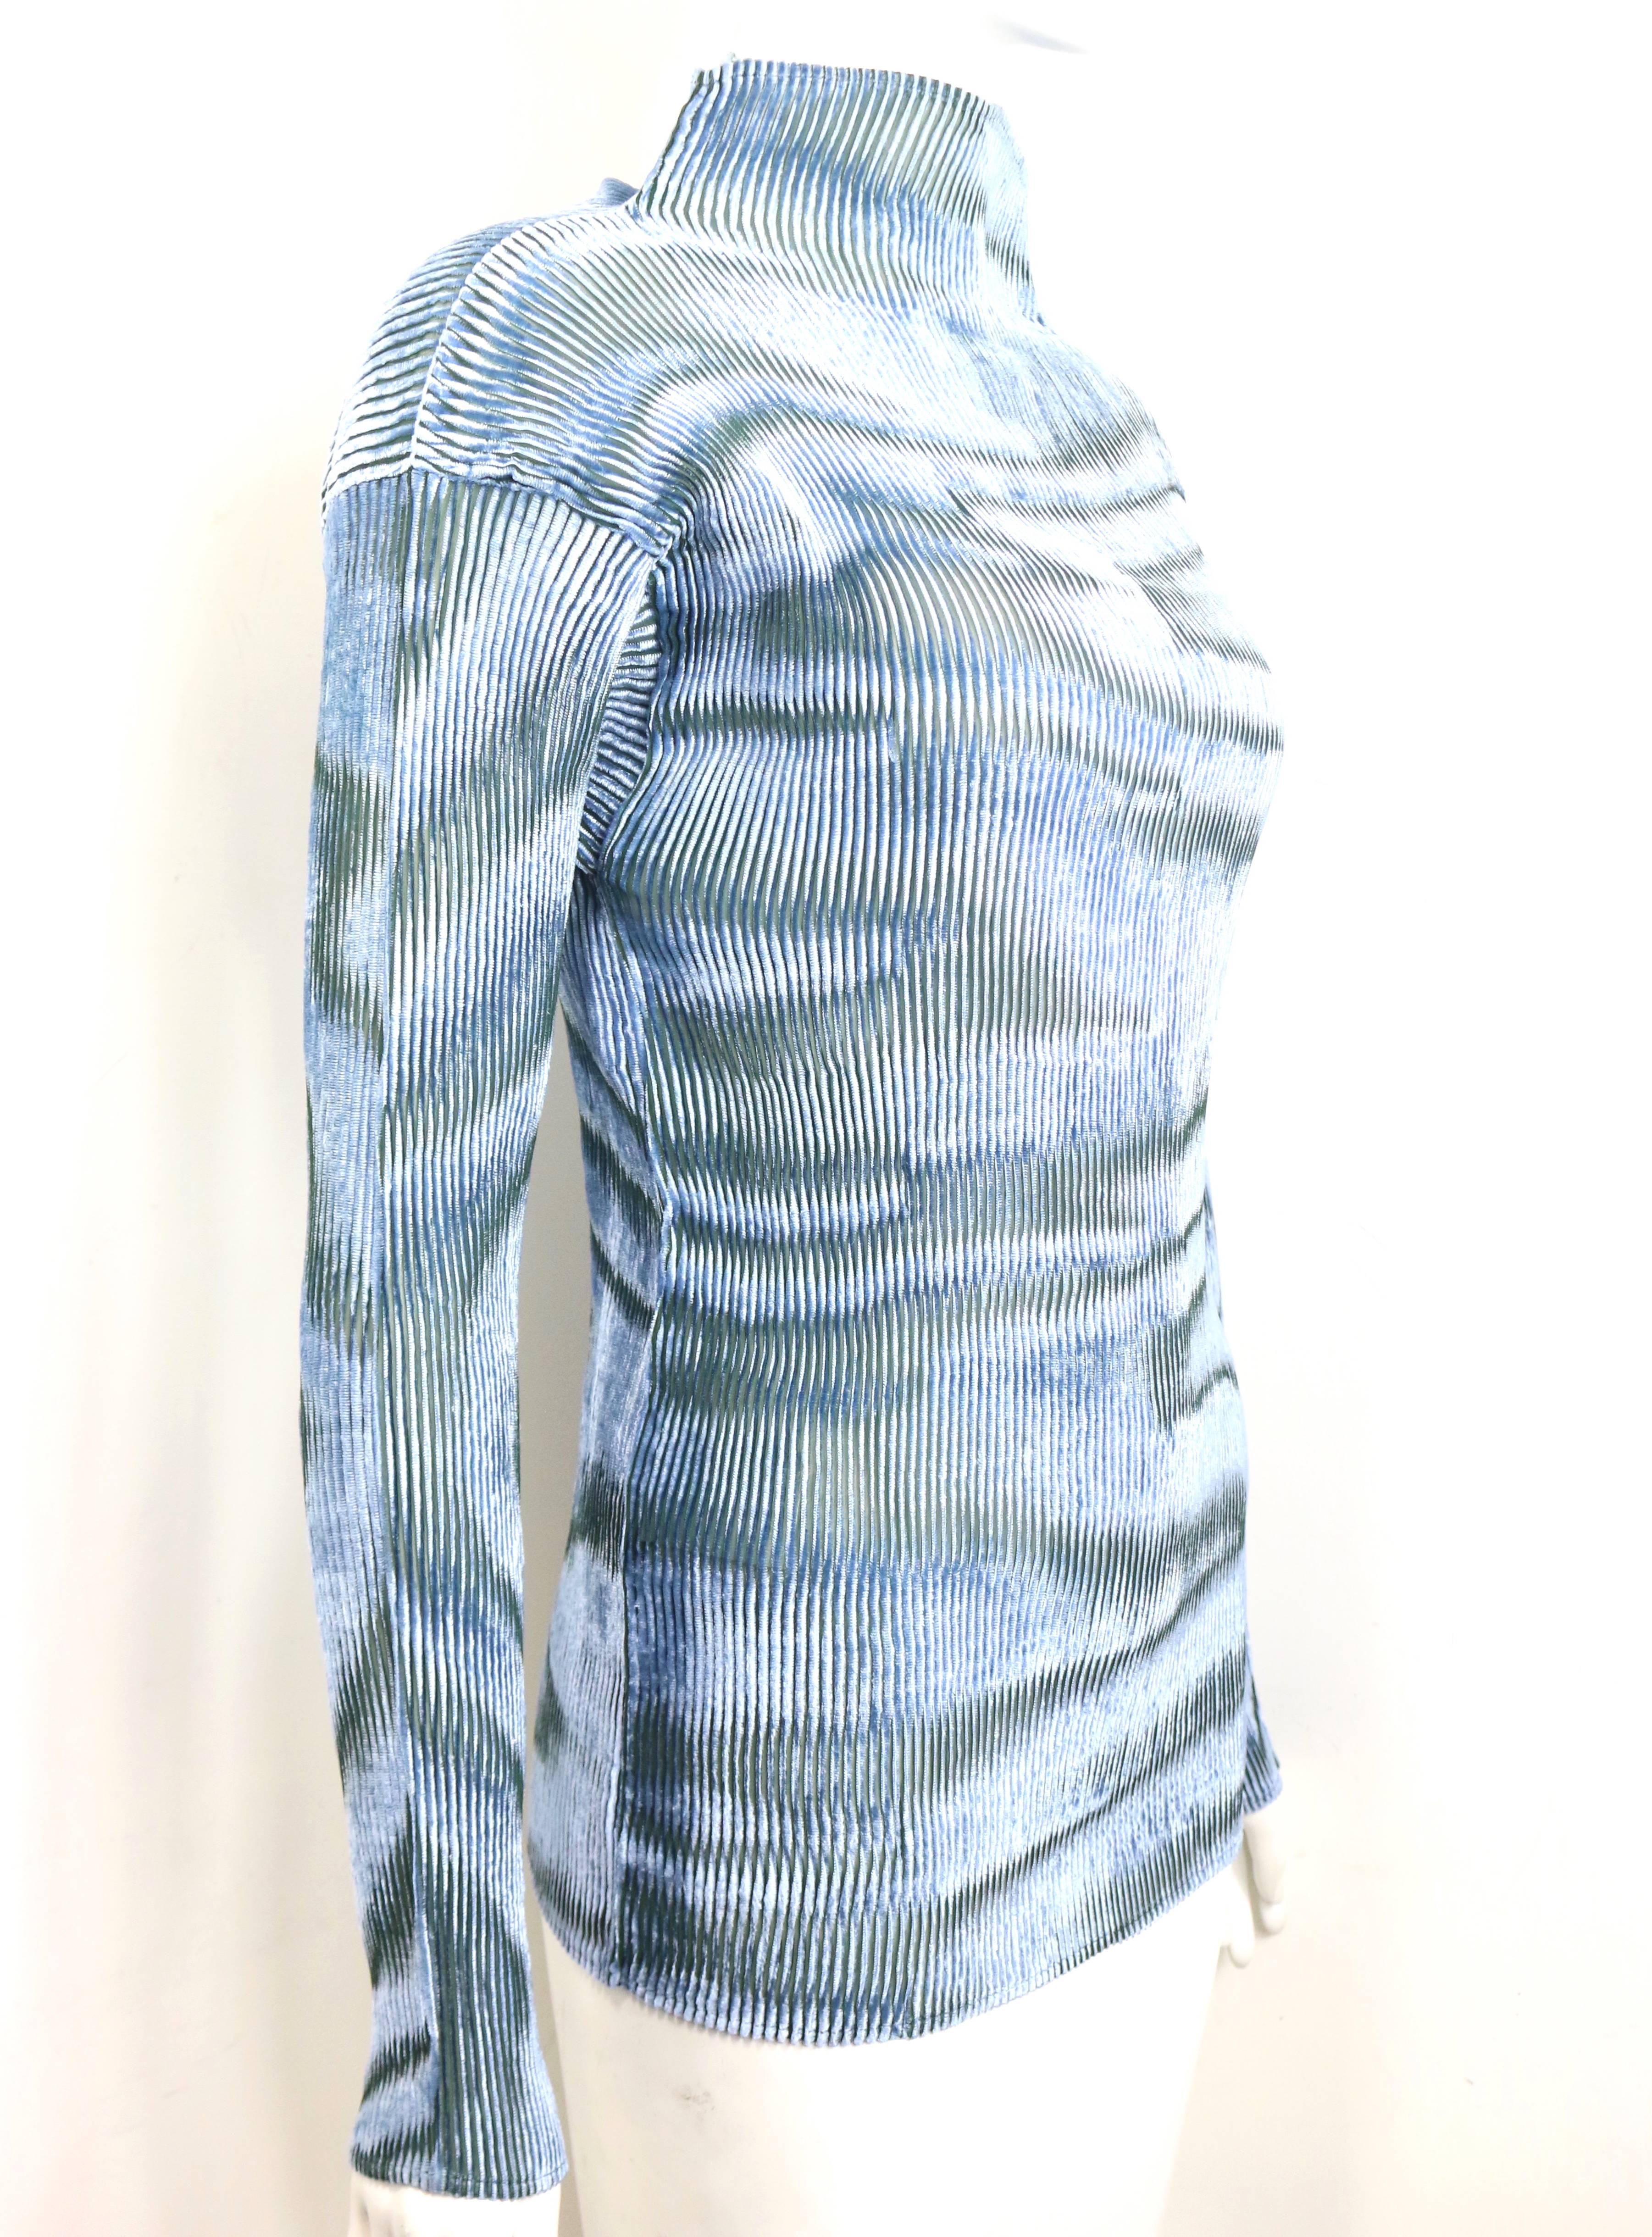 - Vintage 90s Issey Miyake blue velvet plasma wave pattern long sleeves high neck top. 

-  Size M. 

- 50% Polyester, 50% Rayon. 